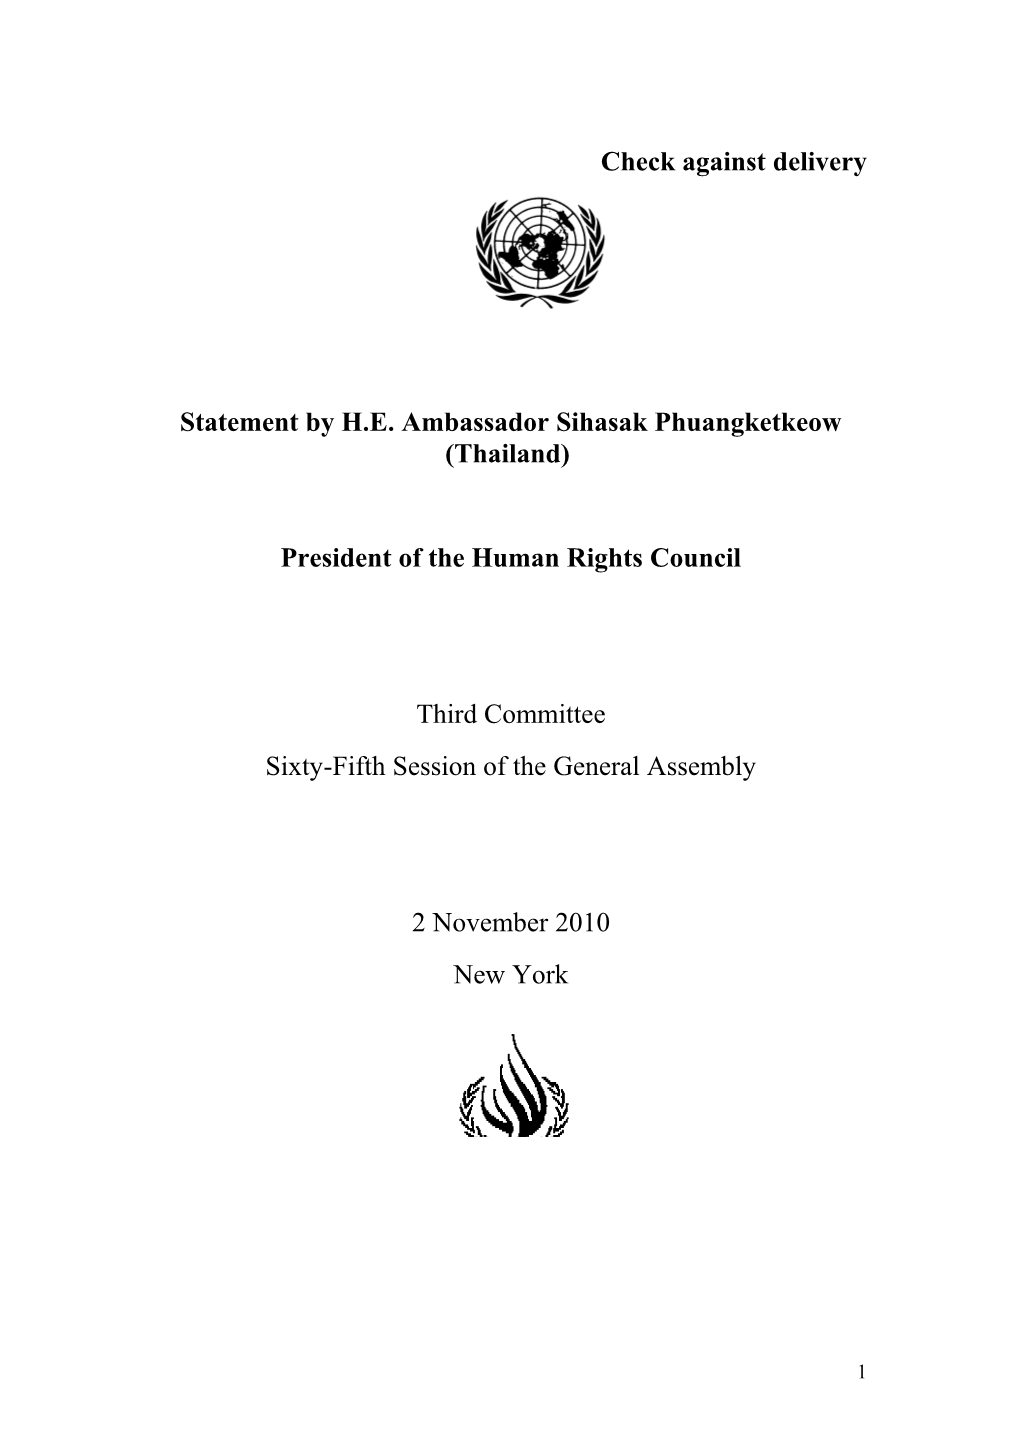 Statement by H.E. Ambassador Sihasak Phuangketkeow (Thailand)